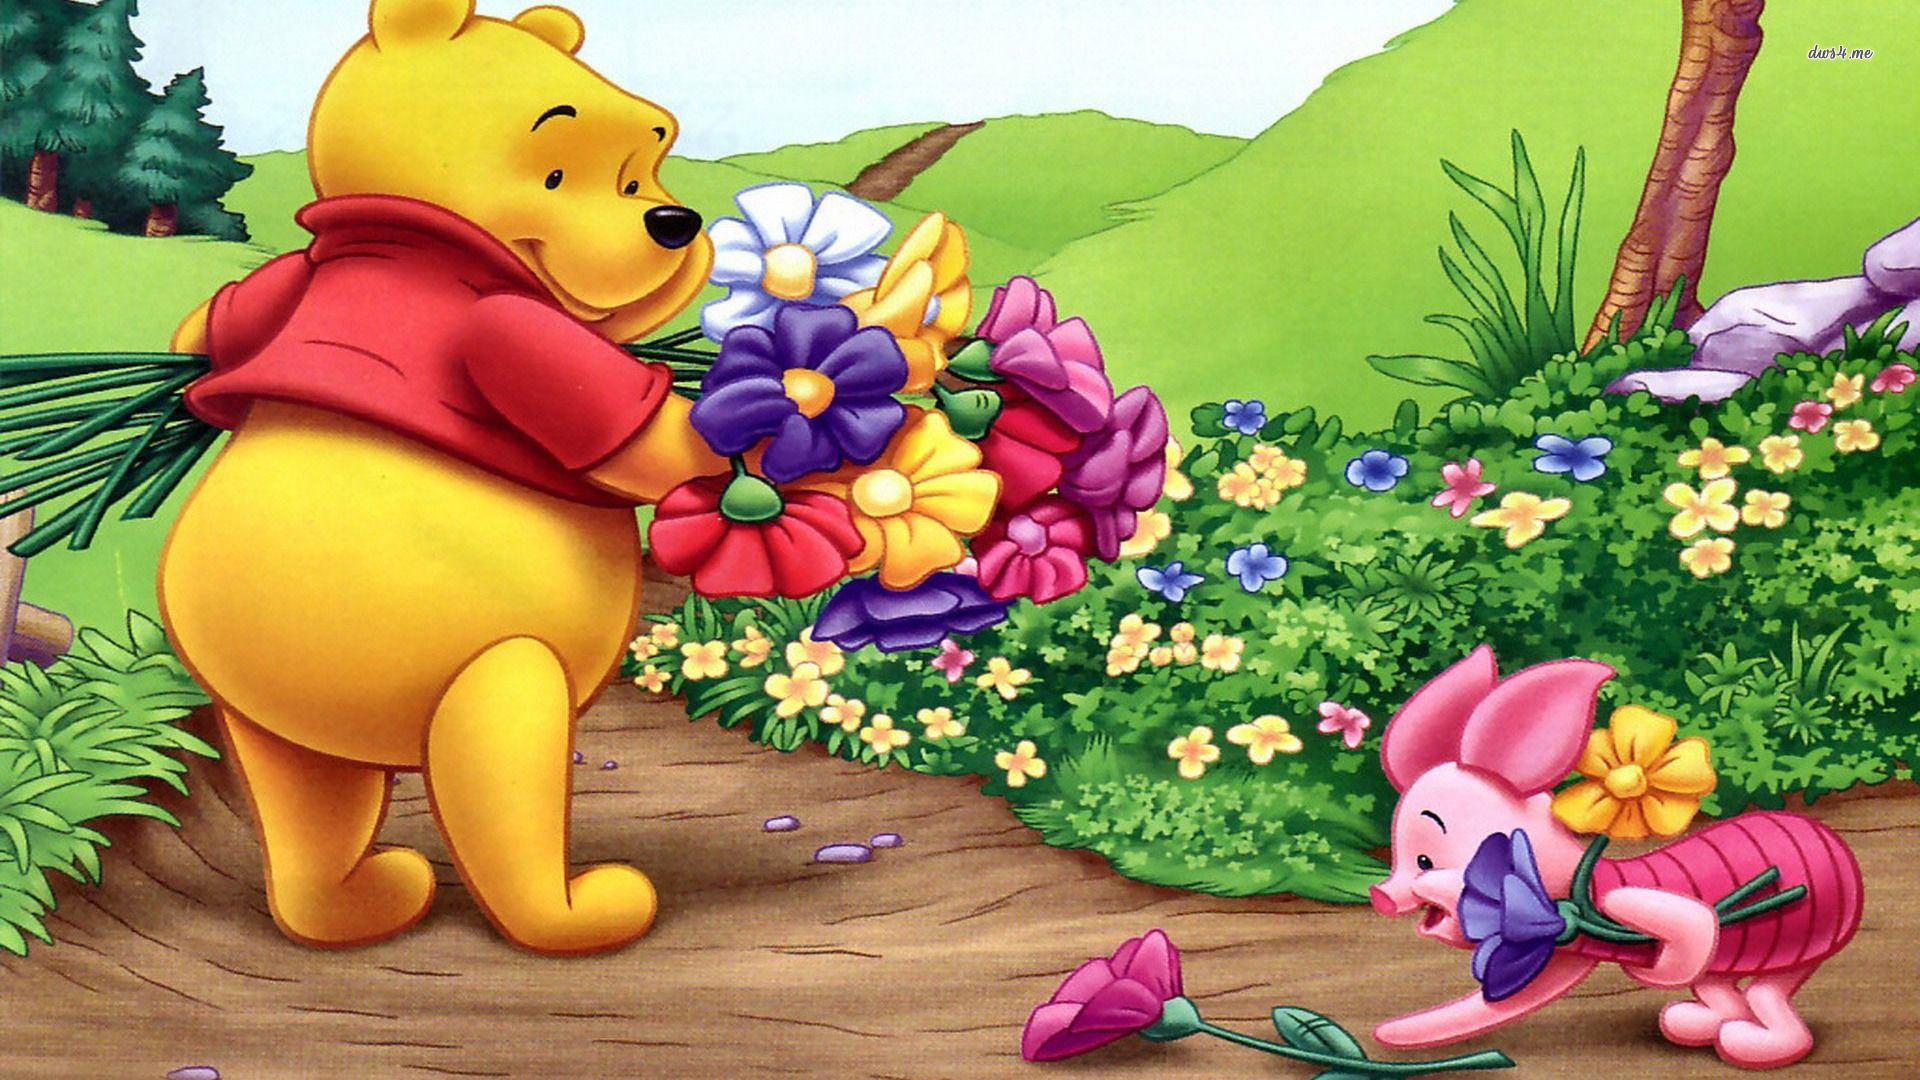 Winnie the Pooh wallpaper - Cartoon wallpapers - #14272